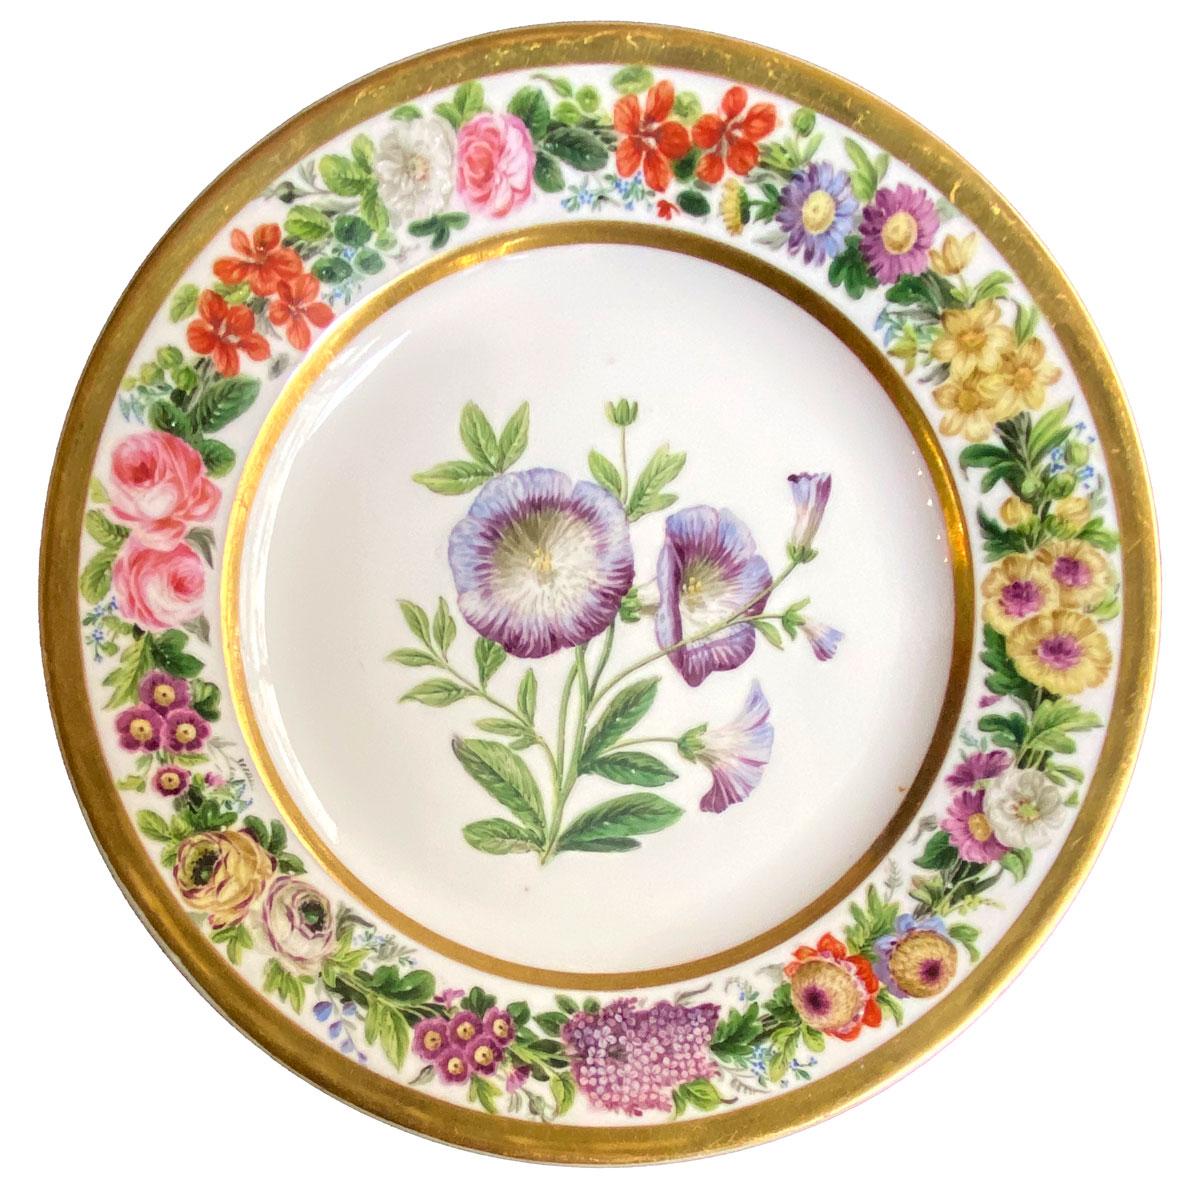 Gilt Set of 6 Early 19th Century Flower Plates by Denuelle - Vieux Paris 